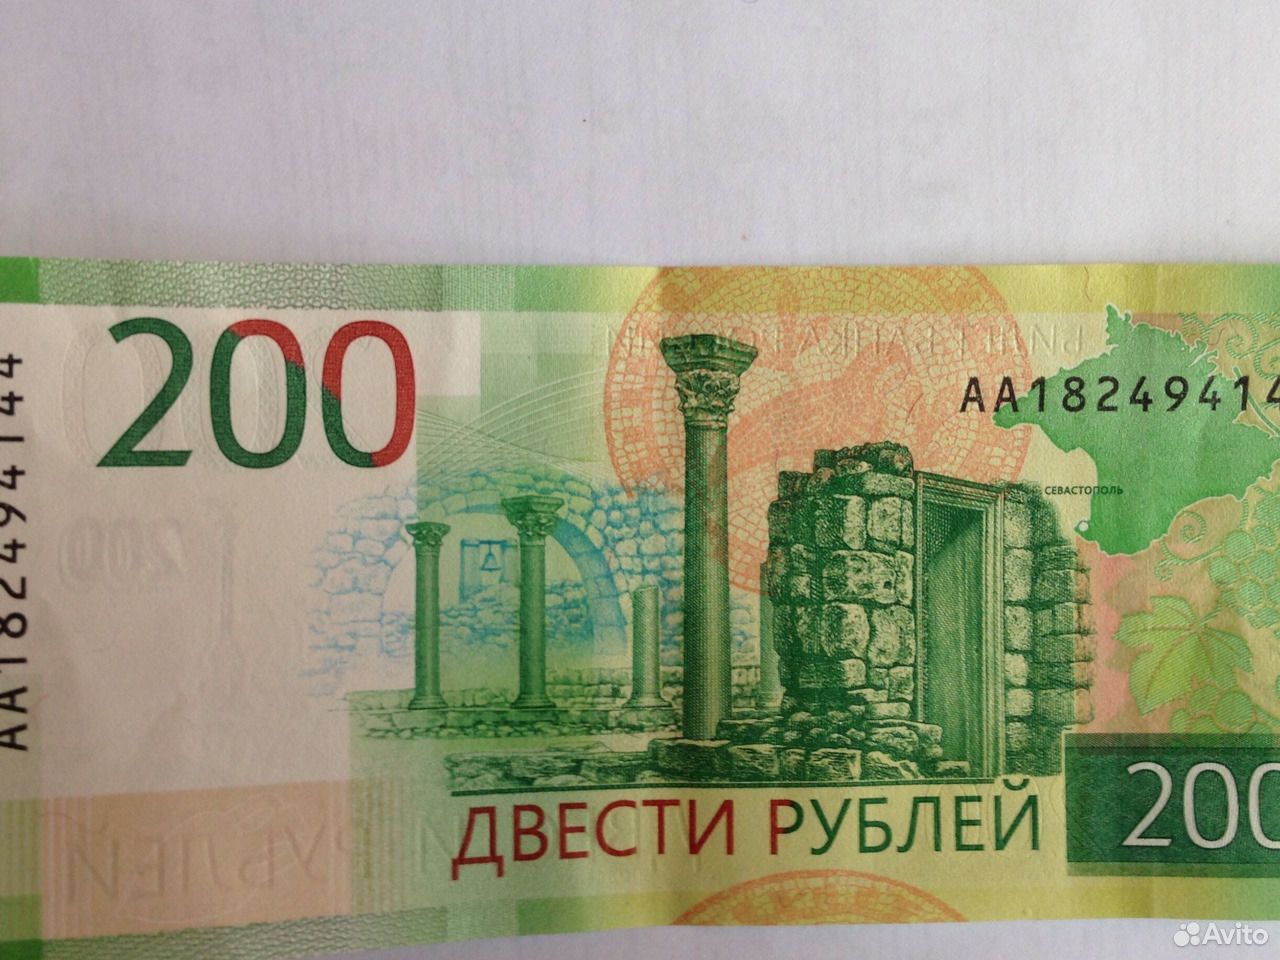 Заработок 200 рублей